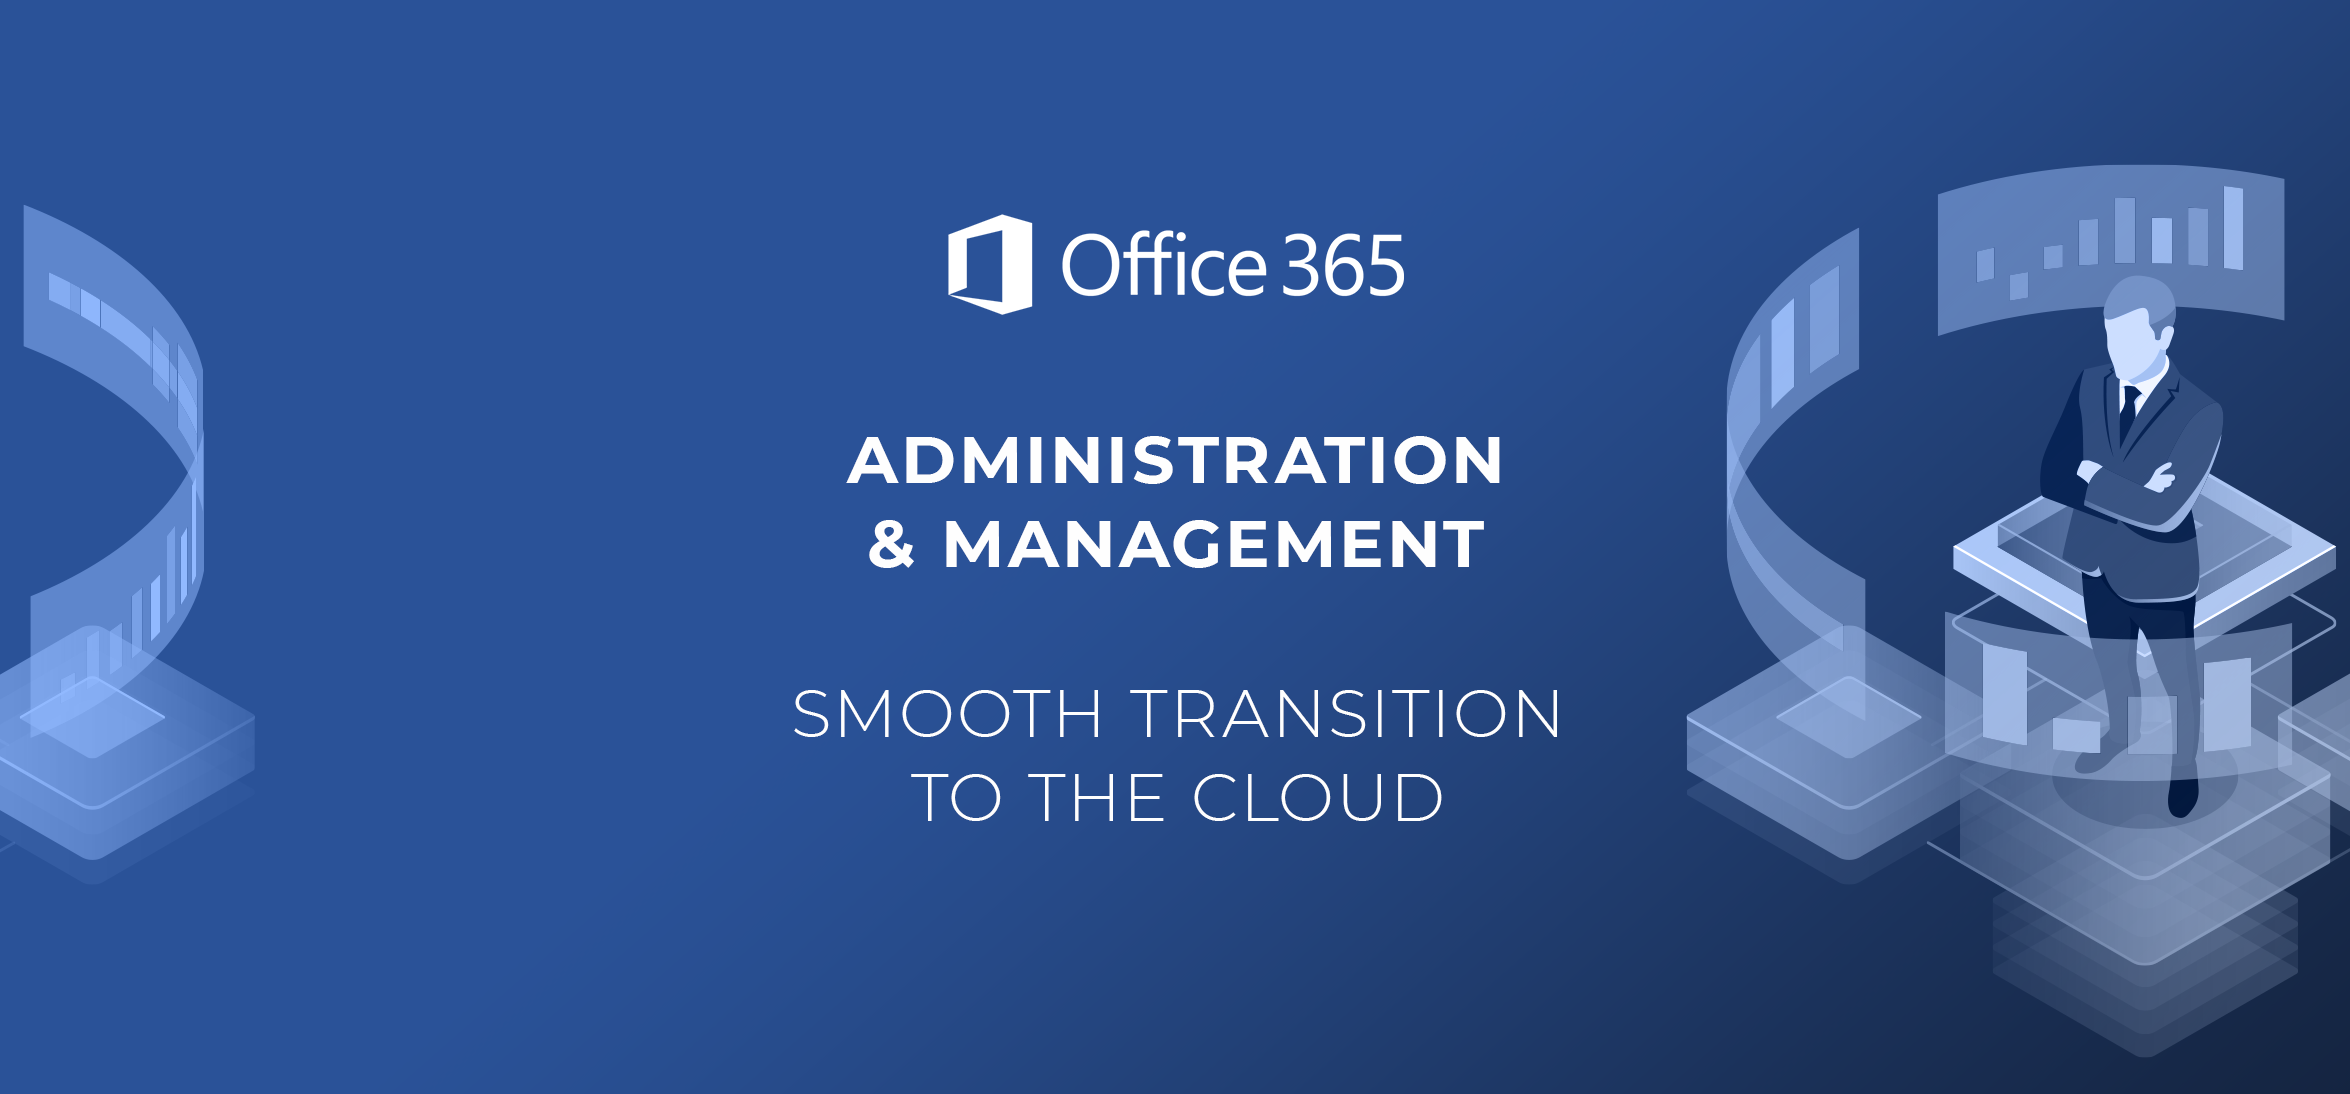 Microsoft Office 365 Administration Services in Chula Vista CA, 91911